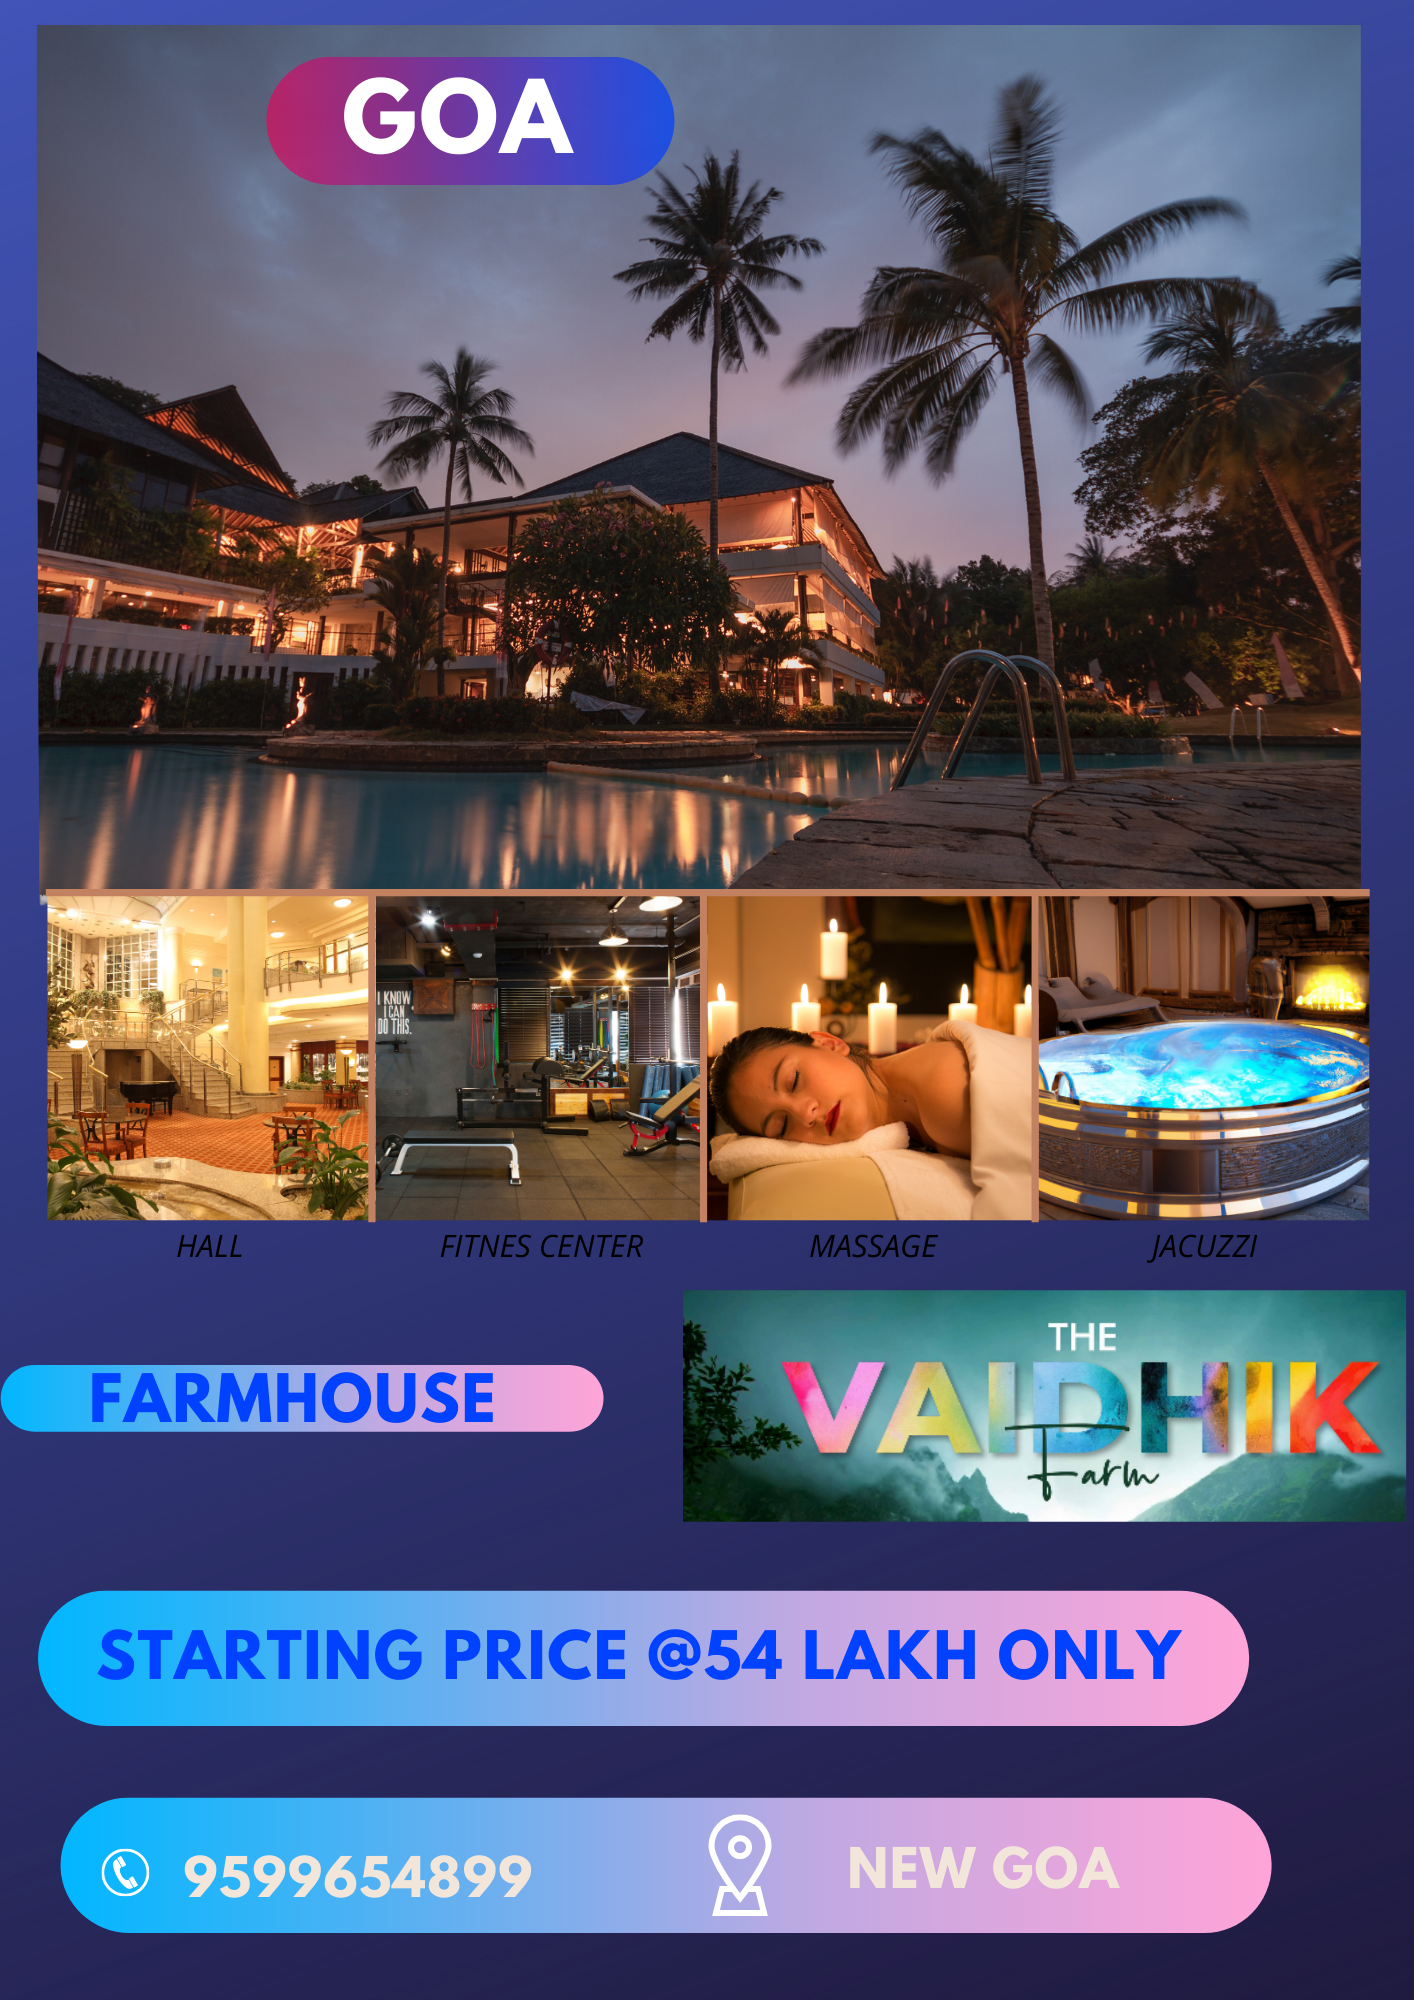 The Vaidhik Farm Land/Farmhouse For sale In New Goa